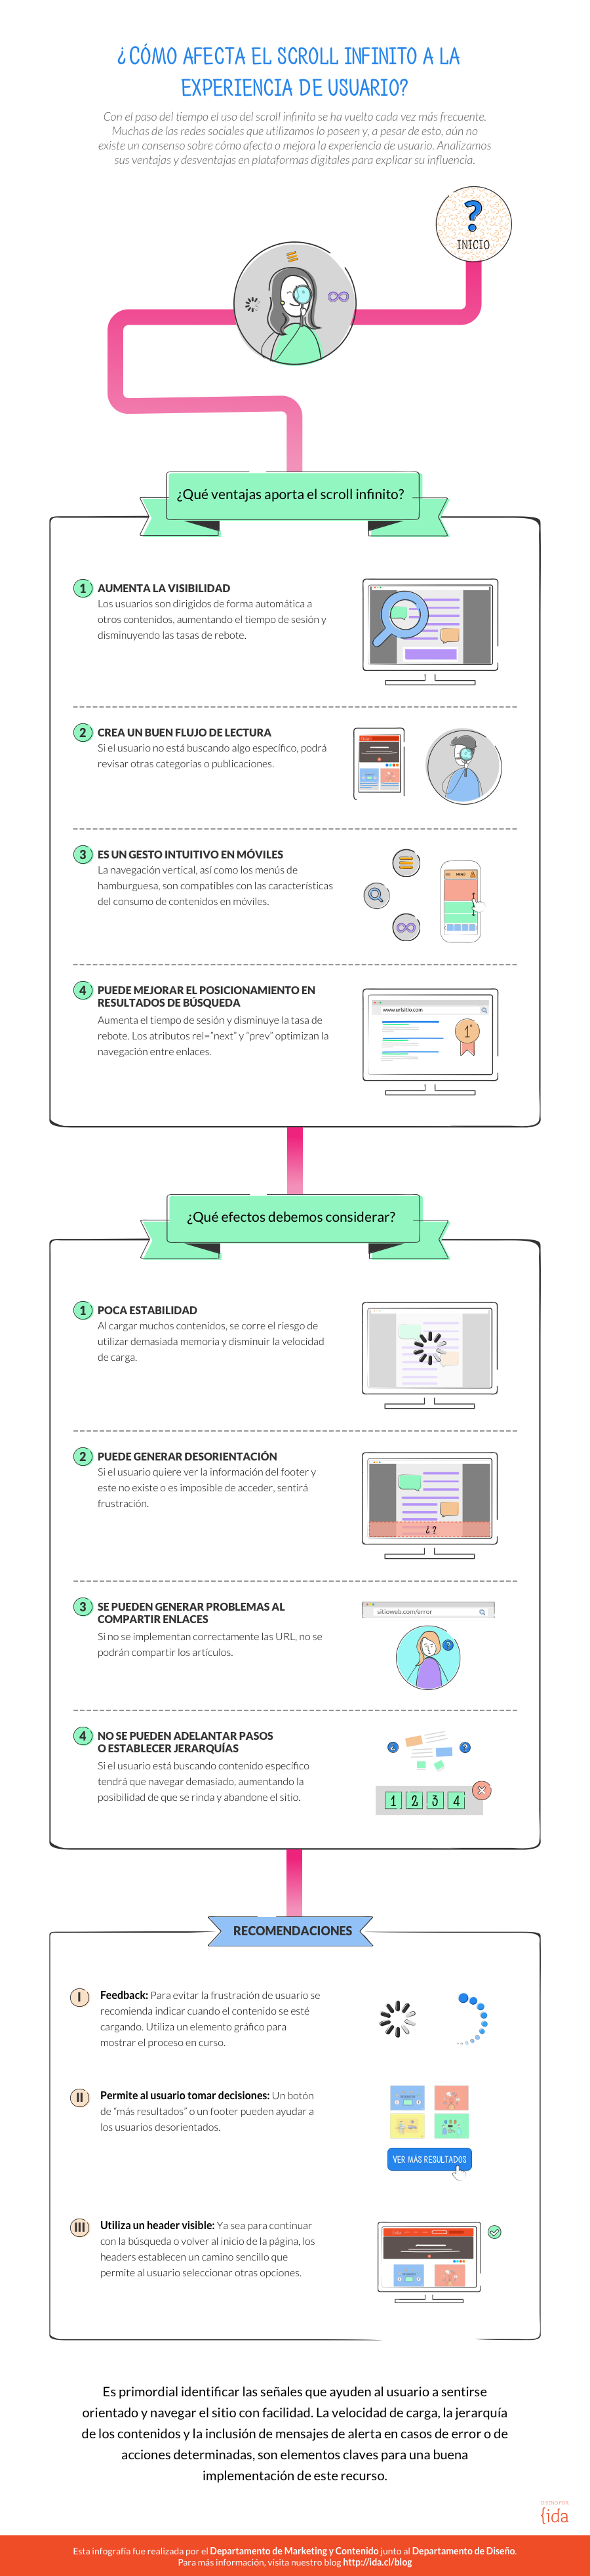 infography infografia analytics design Blog